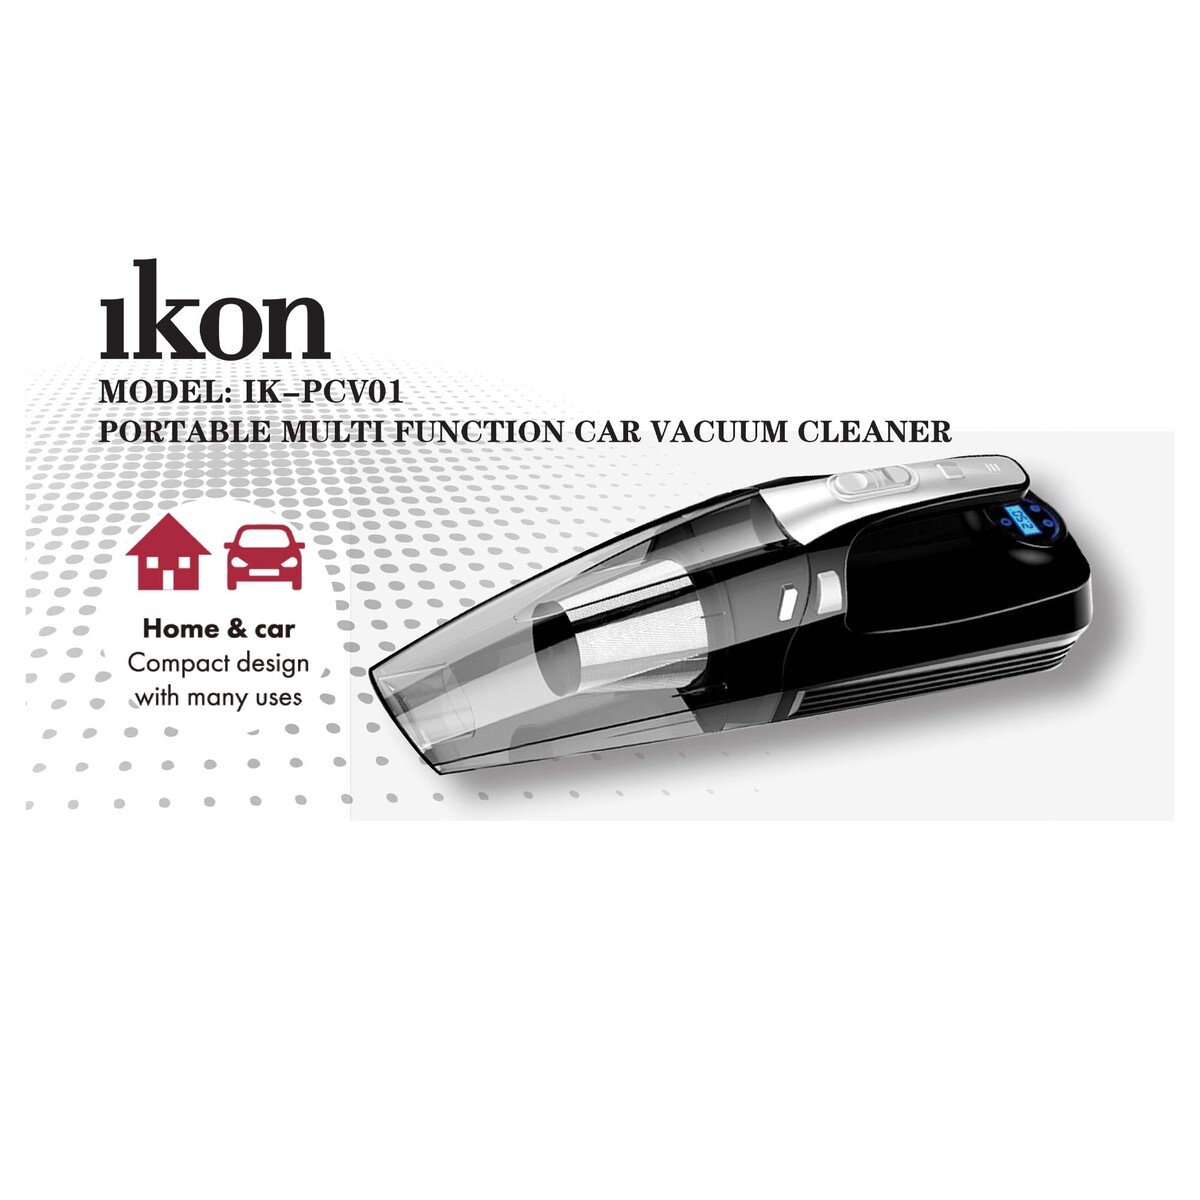 Ikon Portable Multi Function Car Vacuum Cleaner IKPCV01